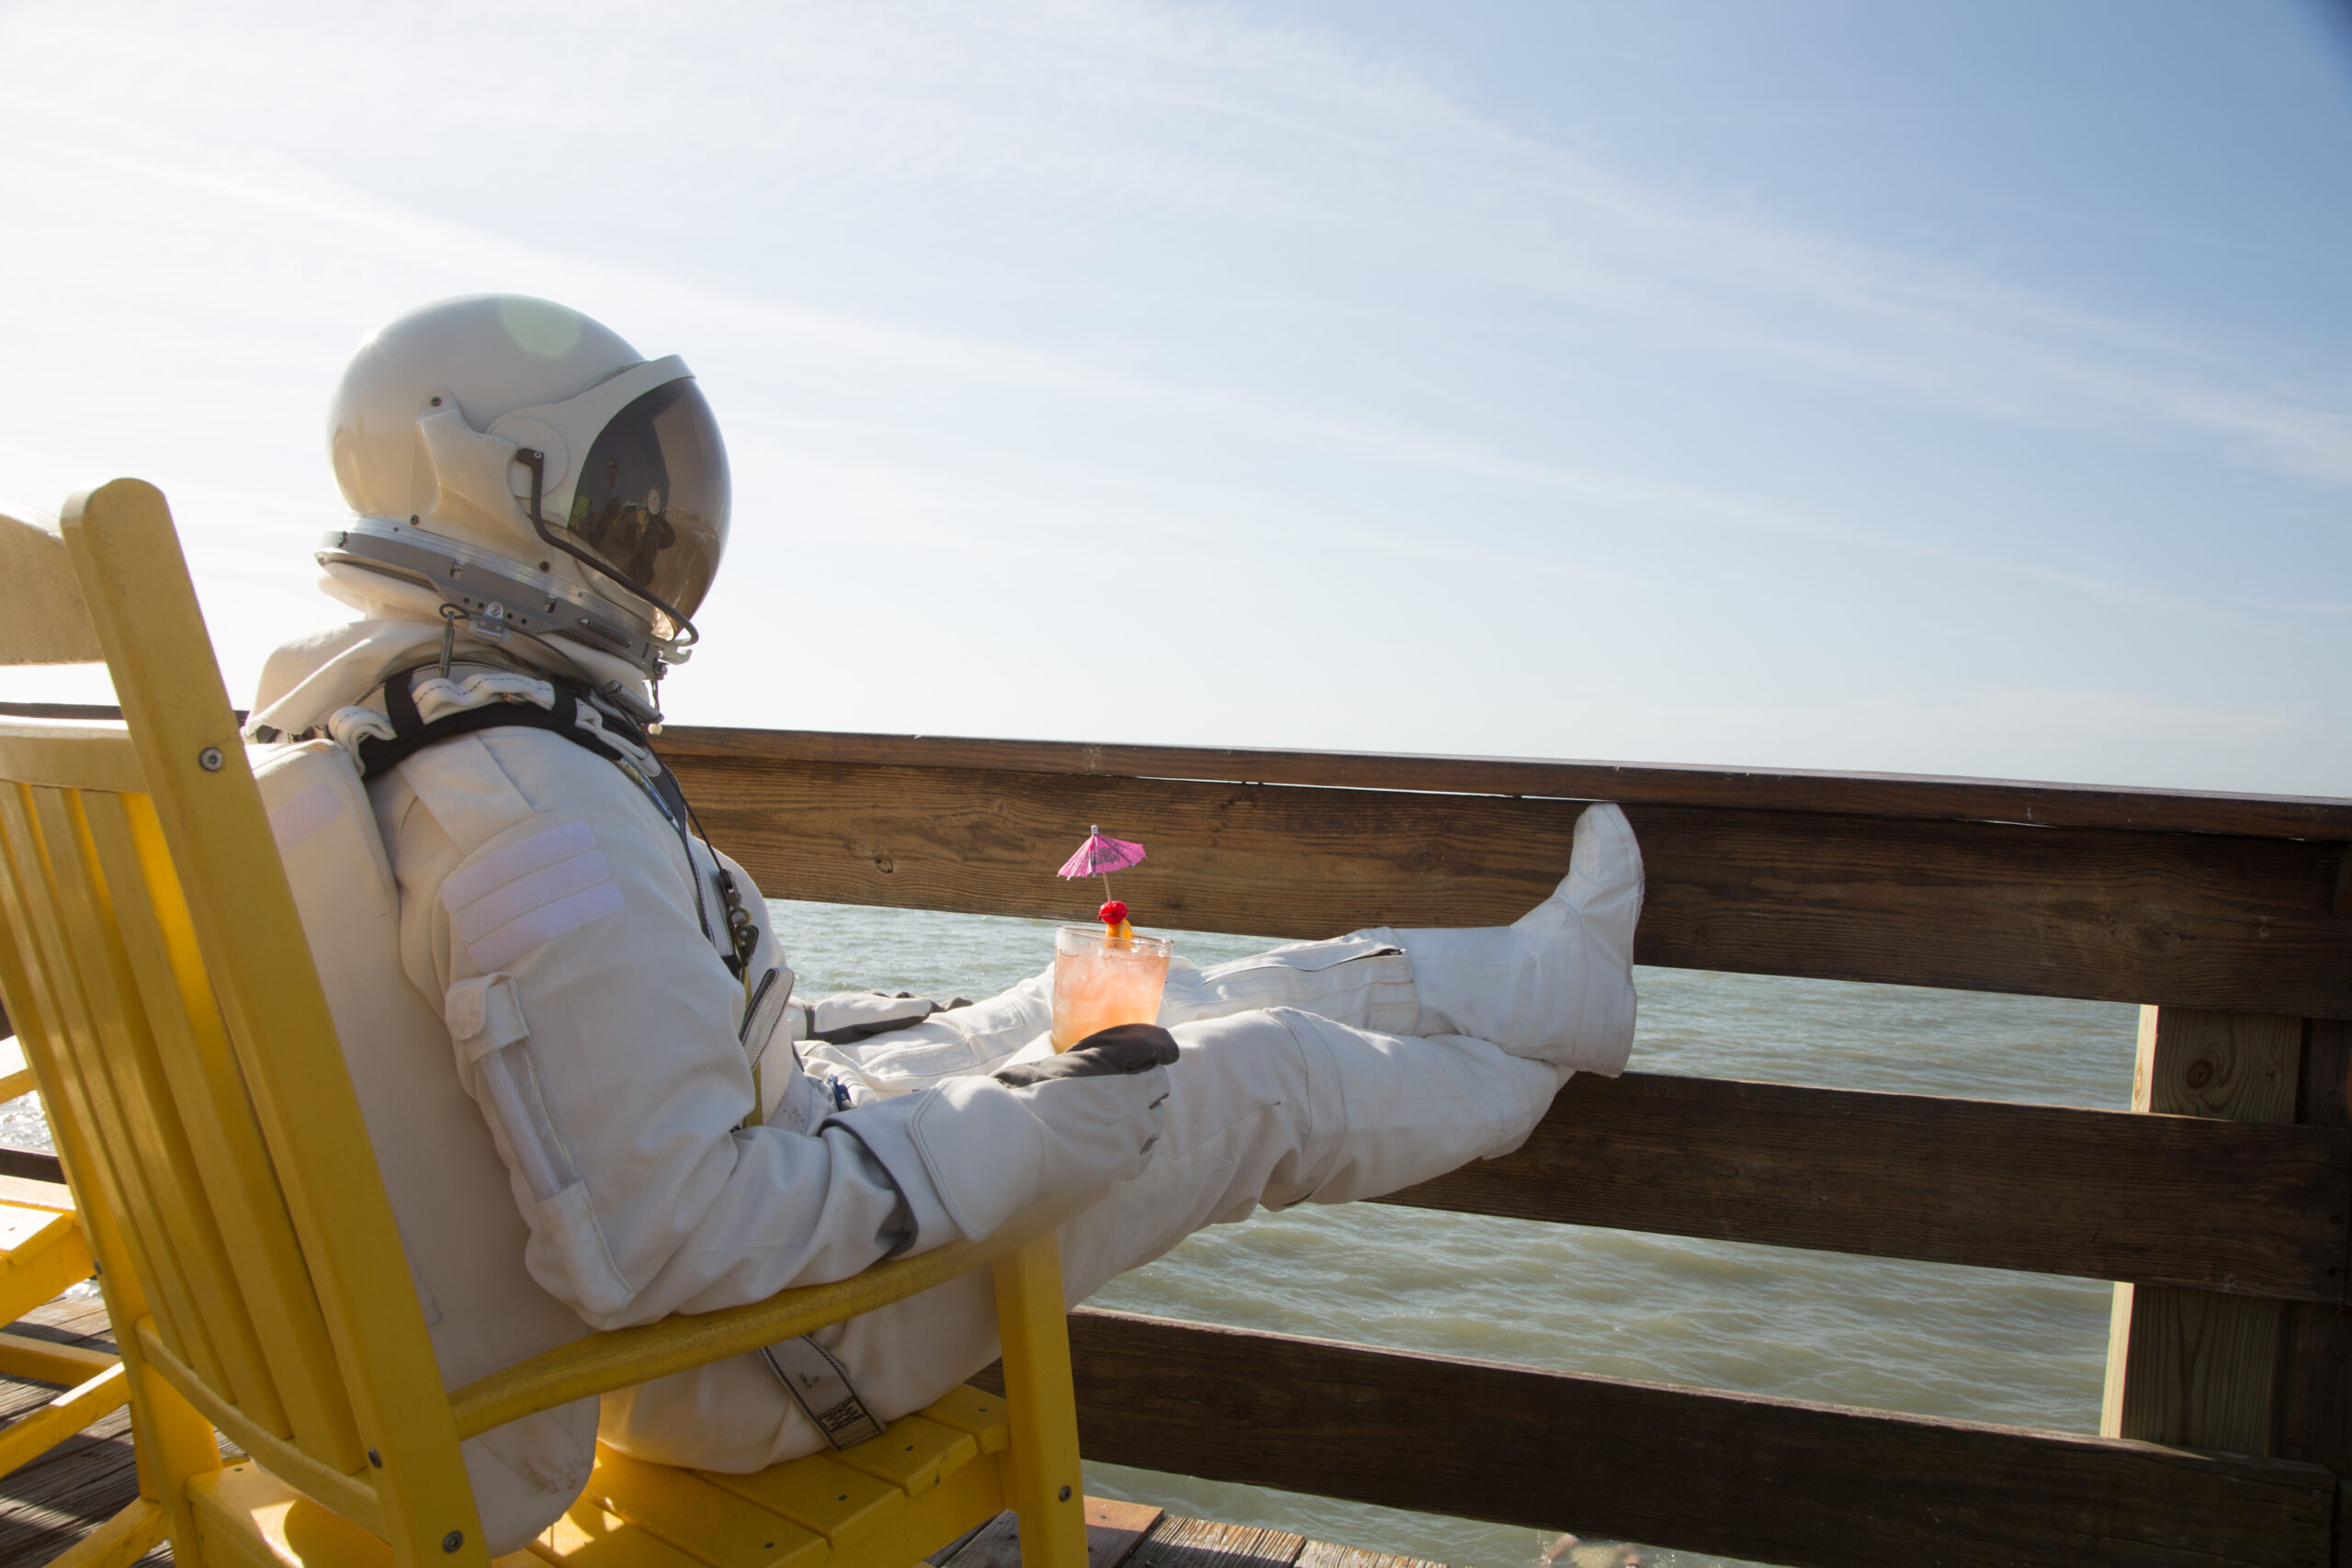 Spaceman Relaxes on the Cocoa Beach Pier